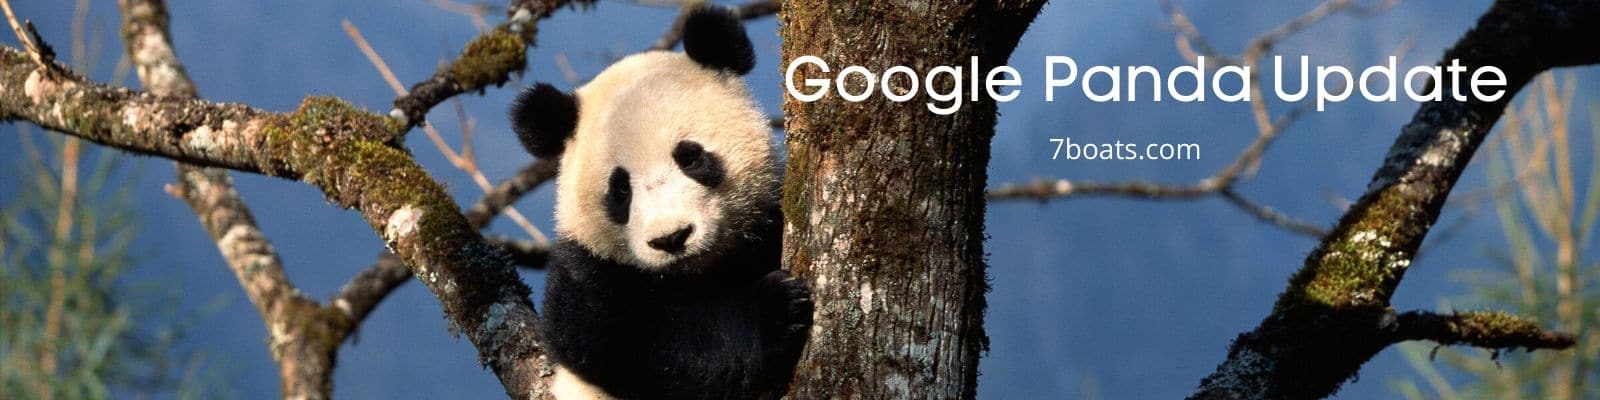 How to get benefit from Google Panda Updates & Penguin Updates